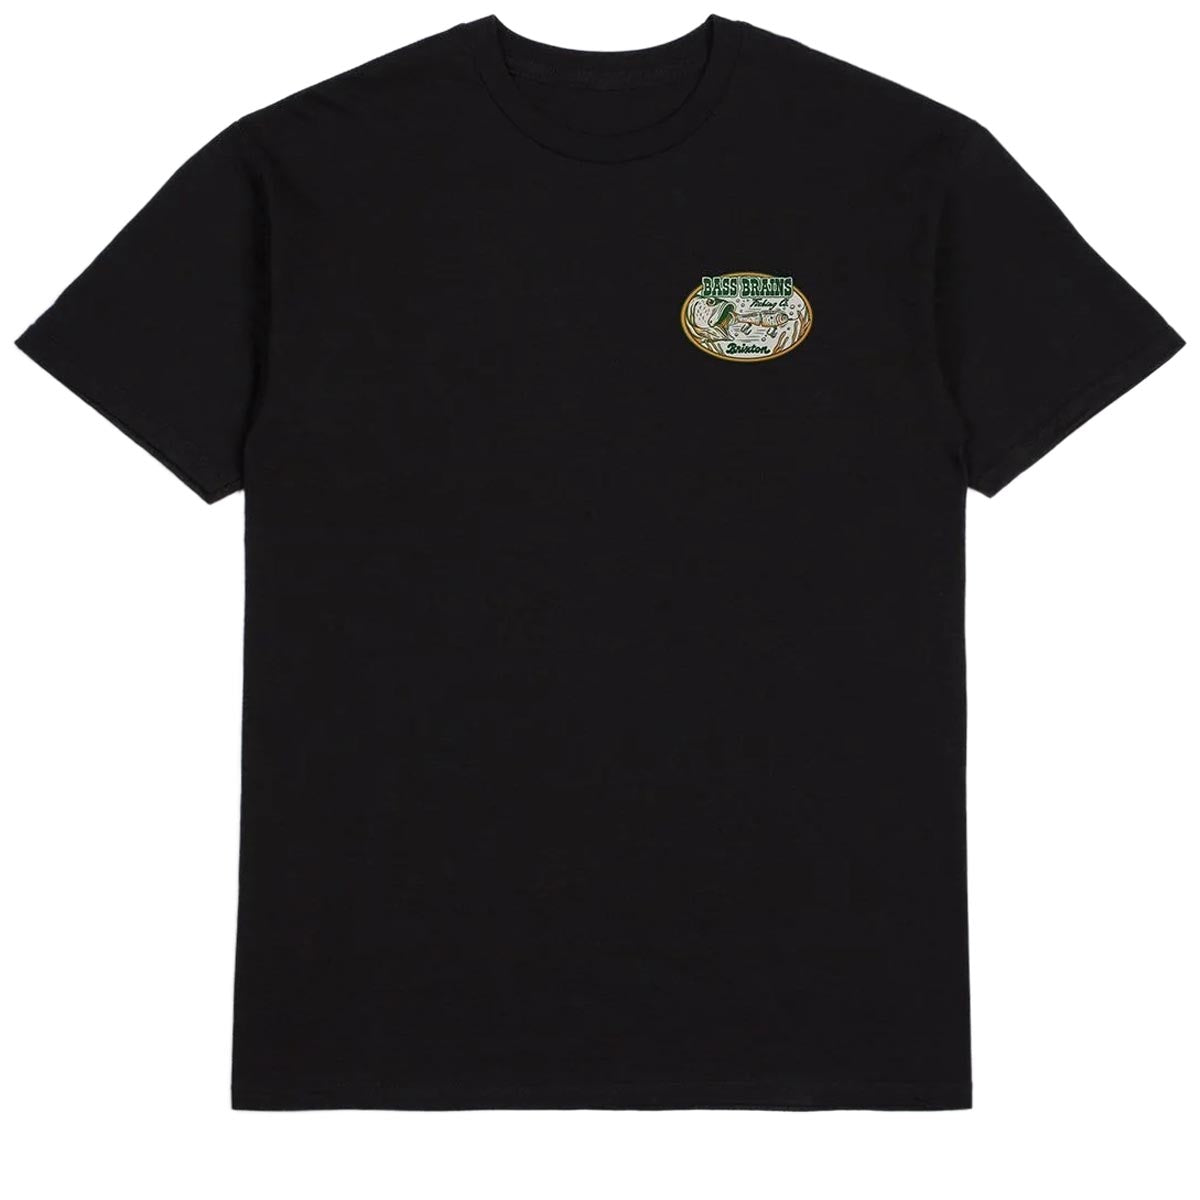 Brixton Bass Brains Swim T-Shirt - Black image 2